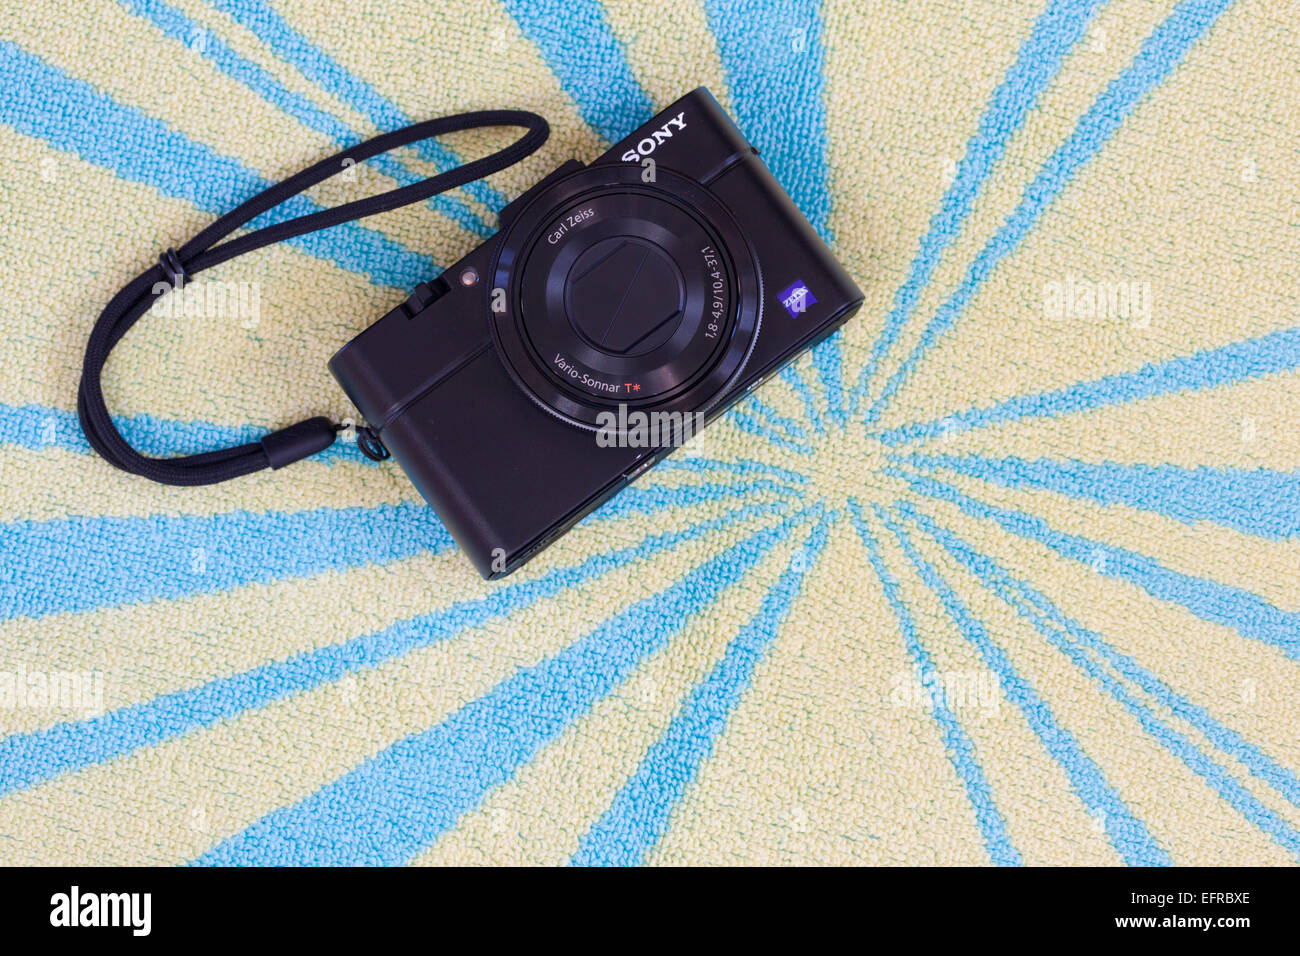 Sony RX100 II digital camera on a beach towel Stock Photo